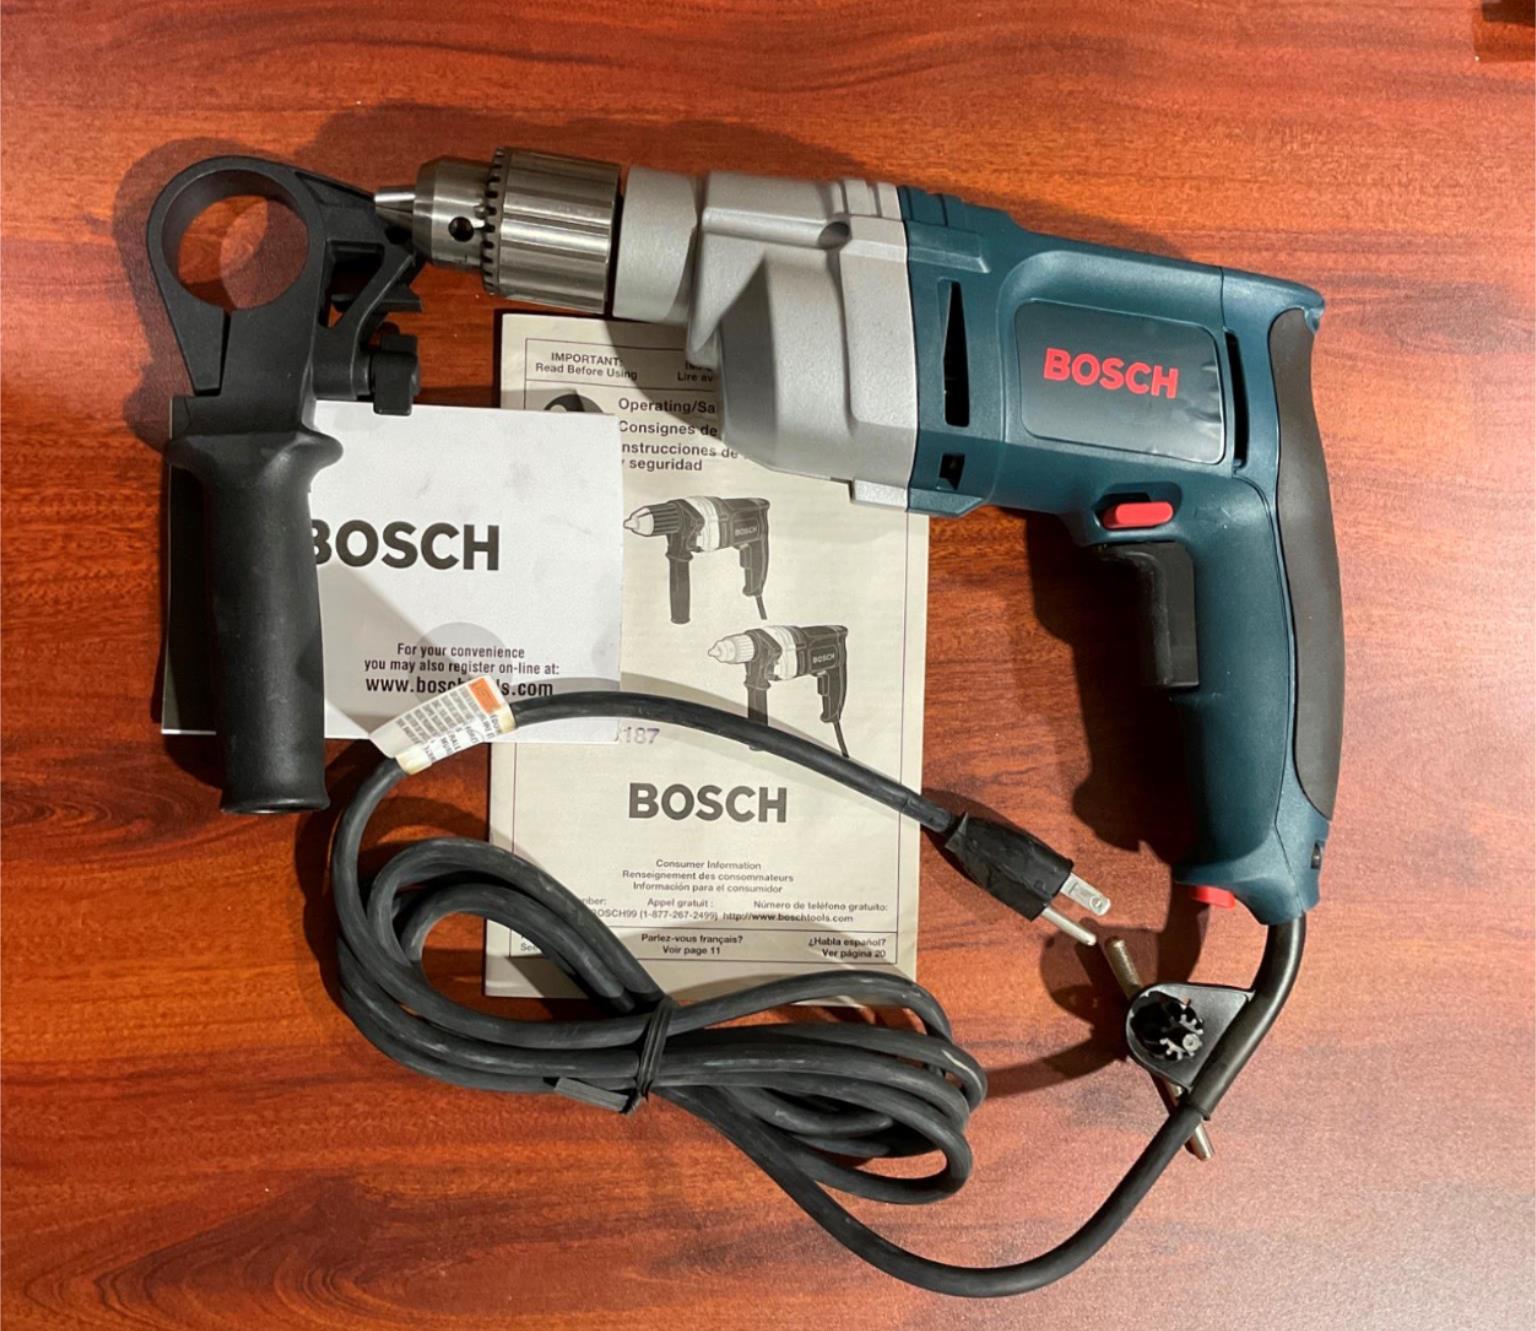 Bosch 1013VSR 1/2" High Speed Drill #19